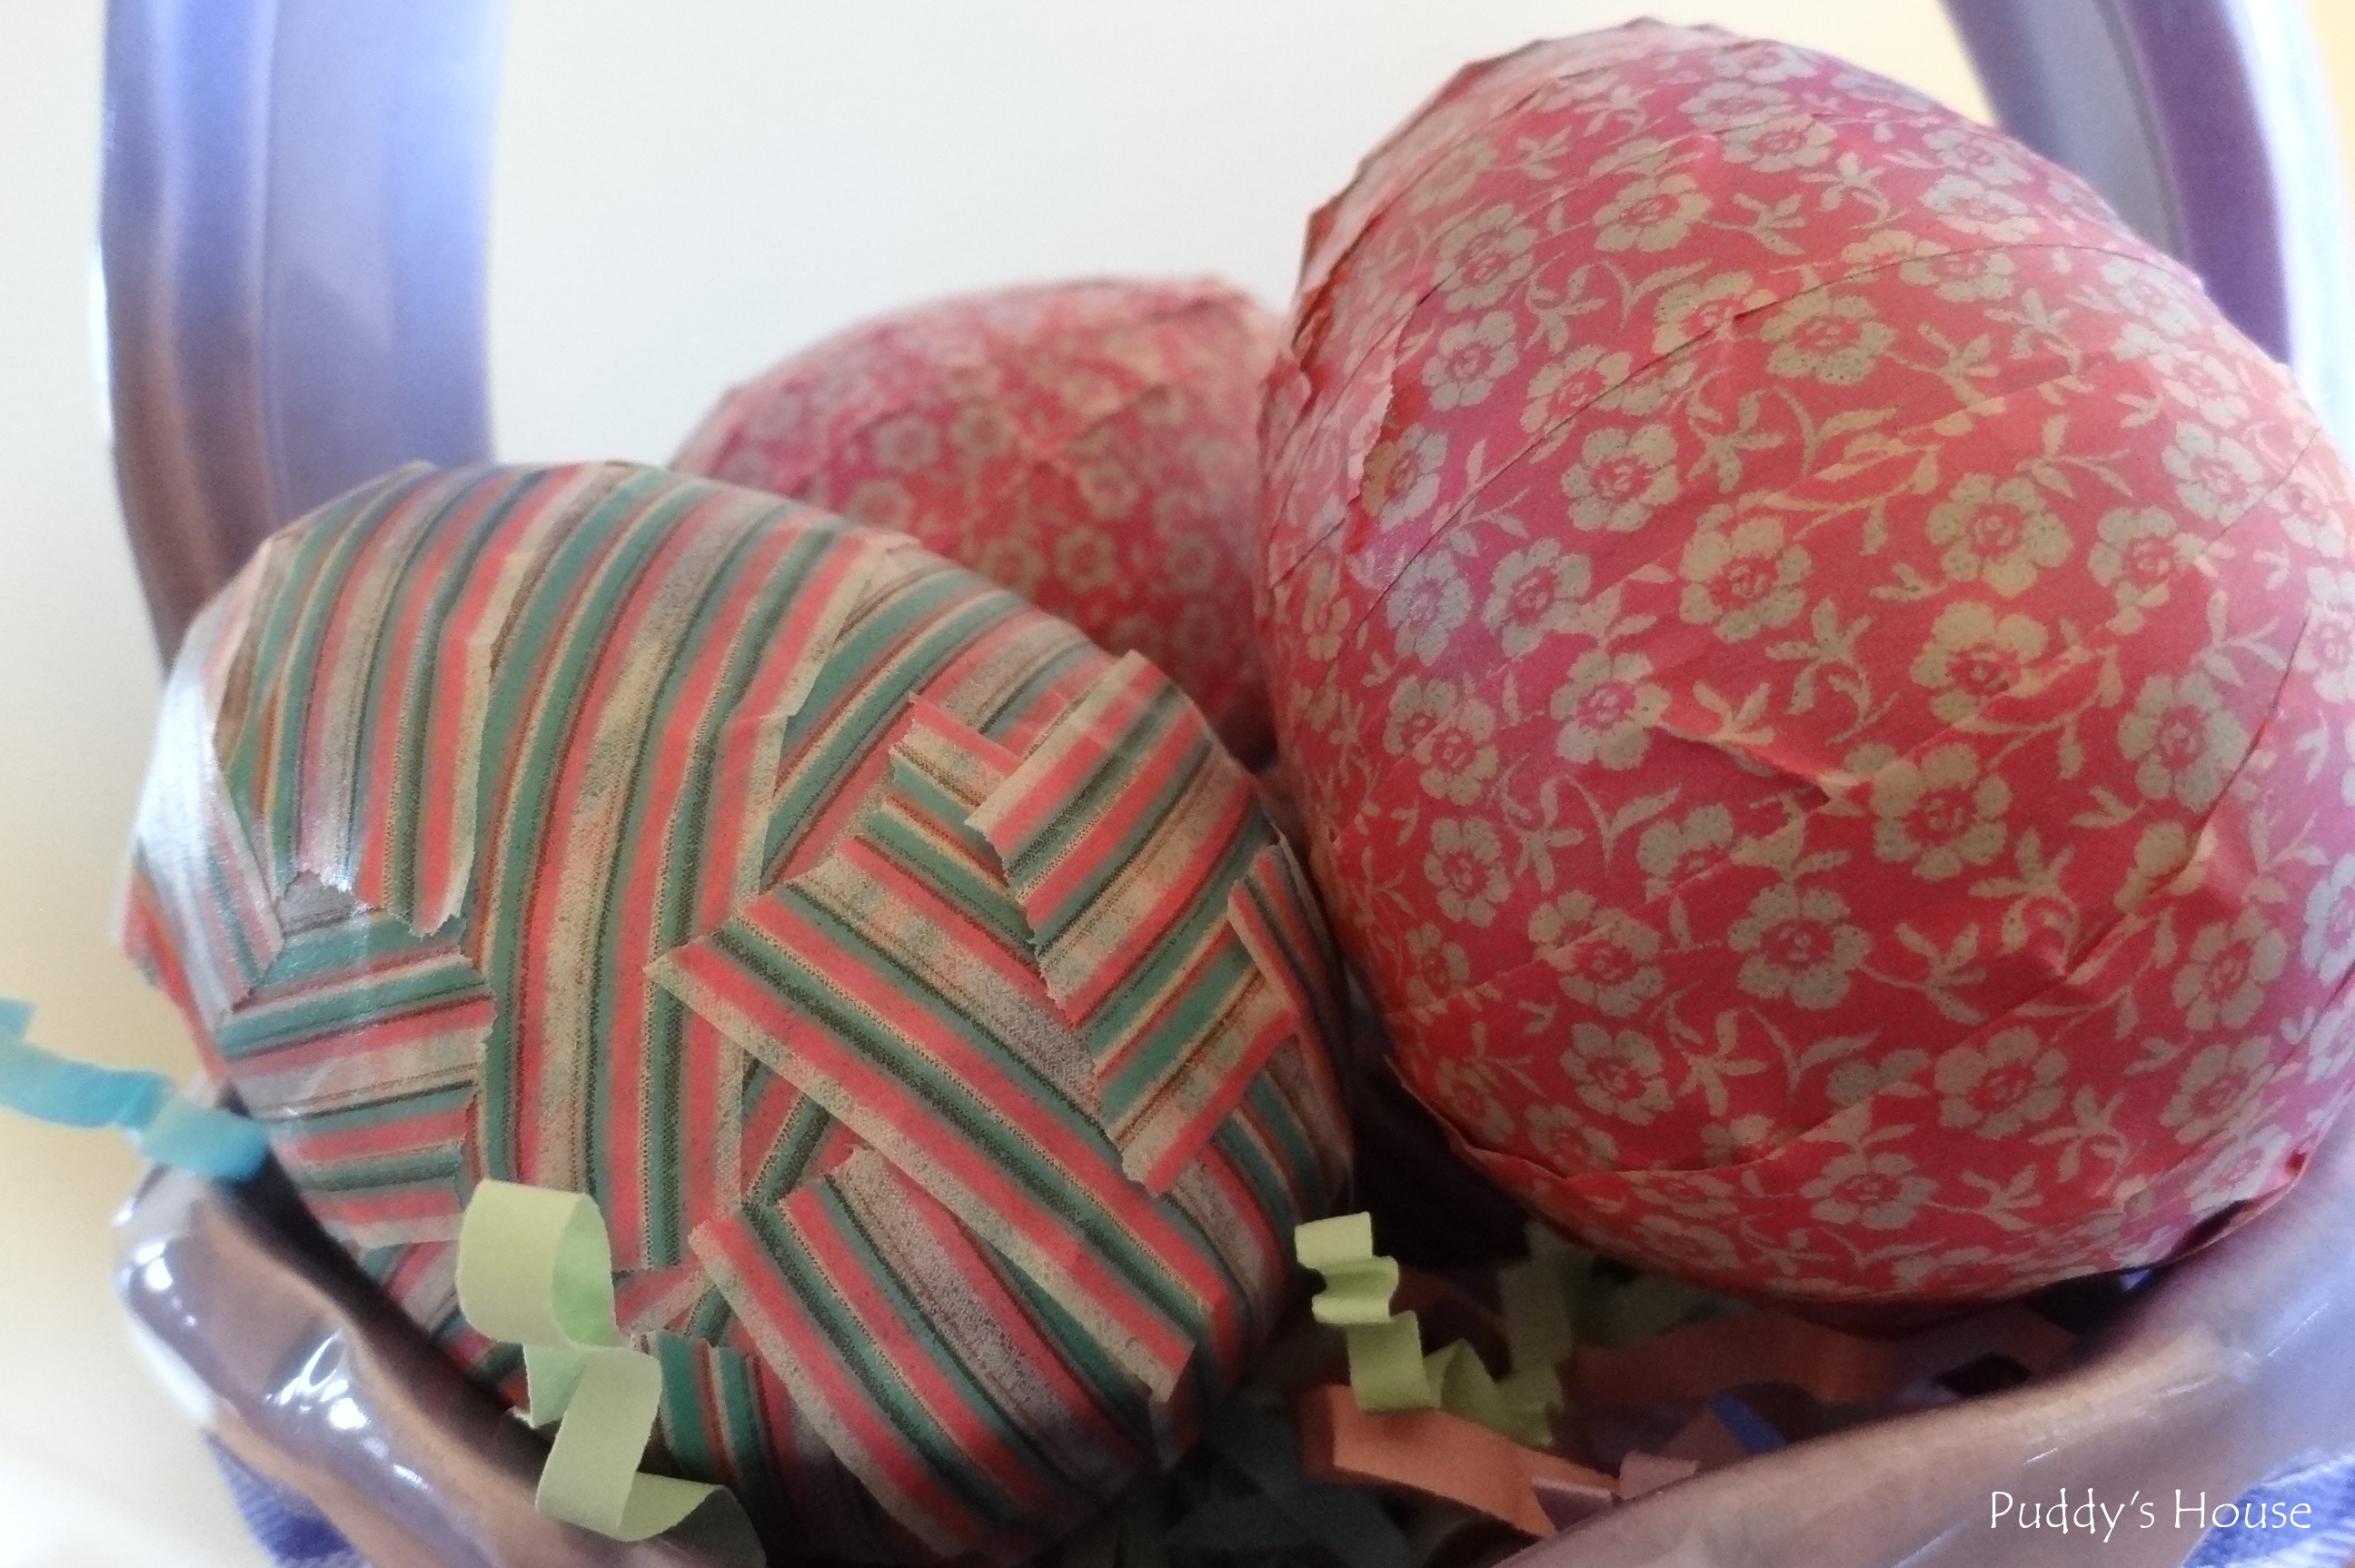 Easter Egg Crafts - plastic egg with washi tape in basket